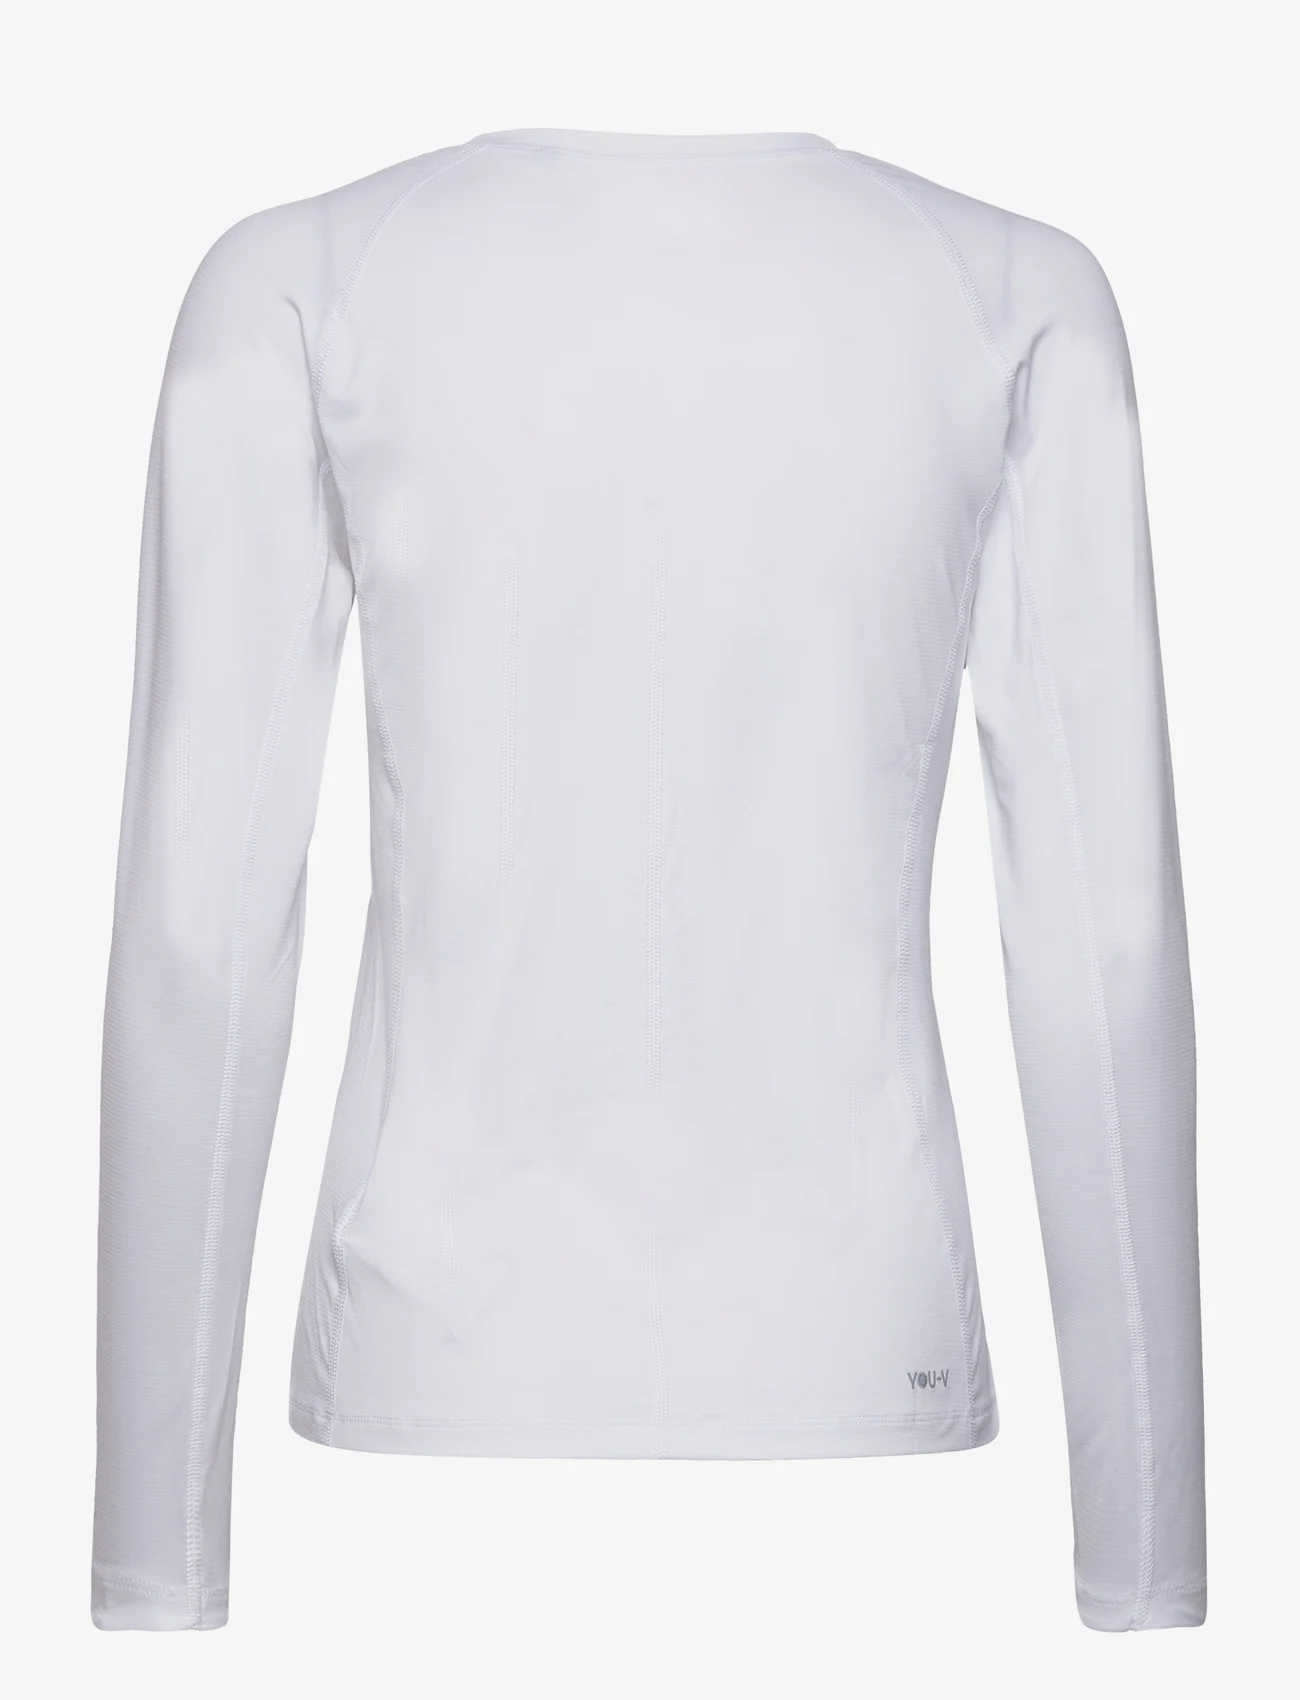 PUMA Golf - W YouV LS Crew - långärmade tröjor - bright white - 1